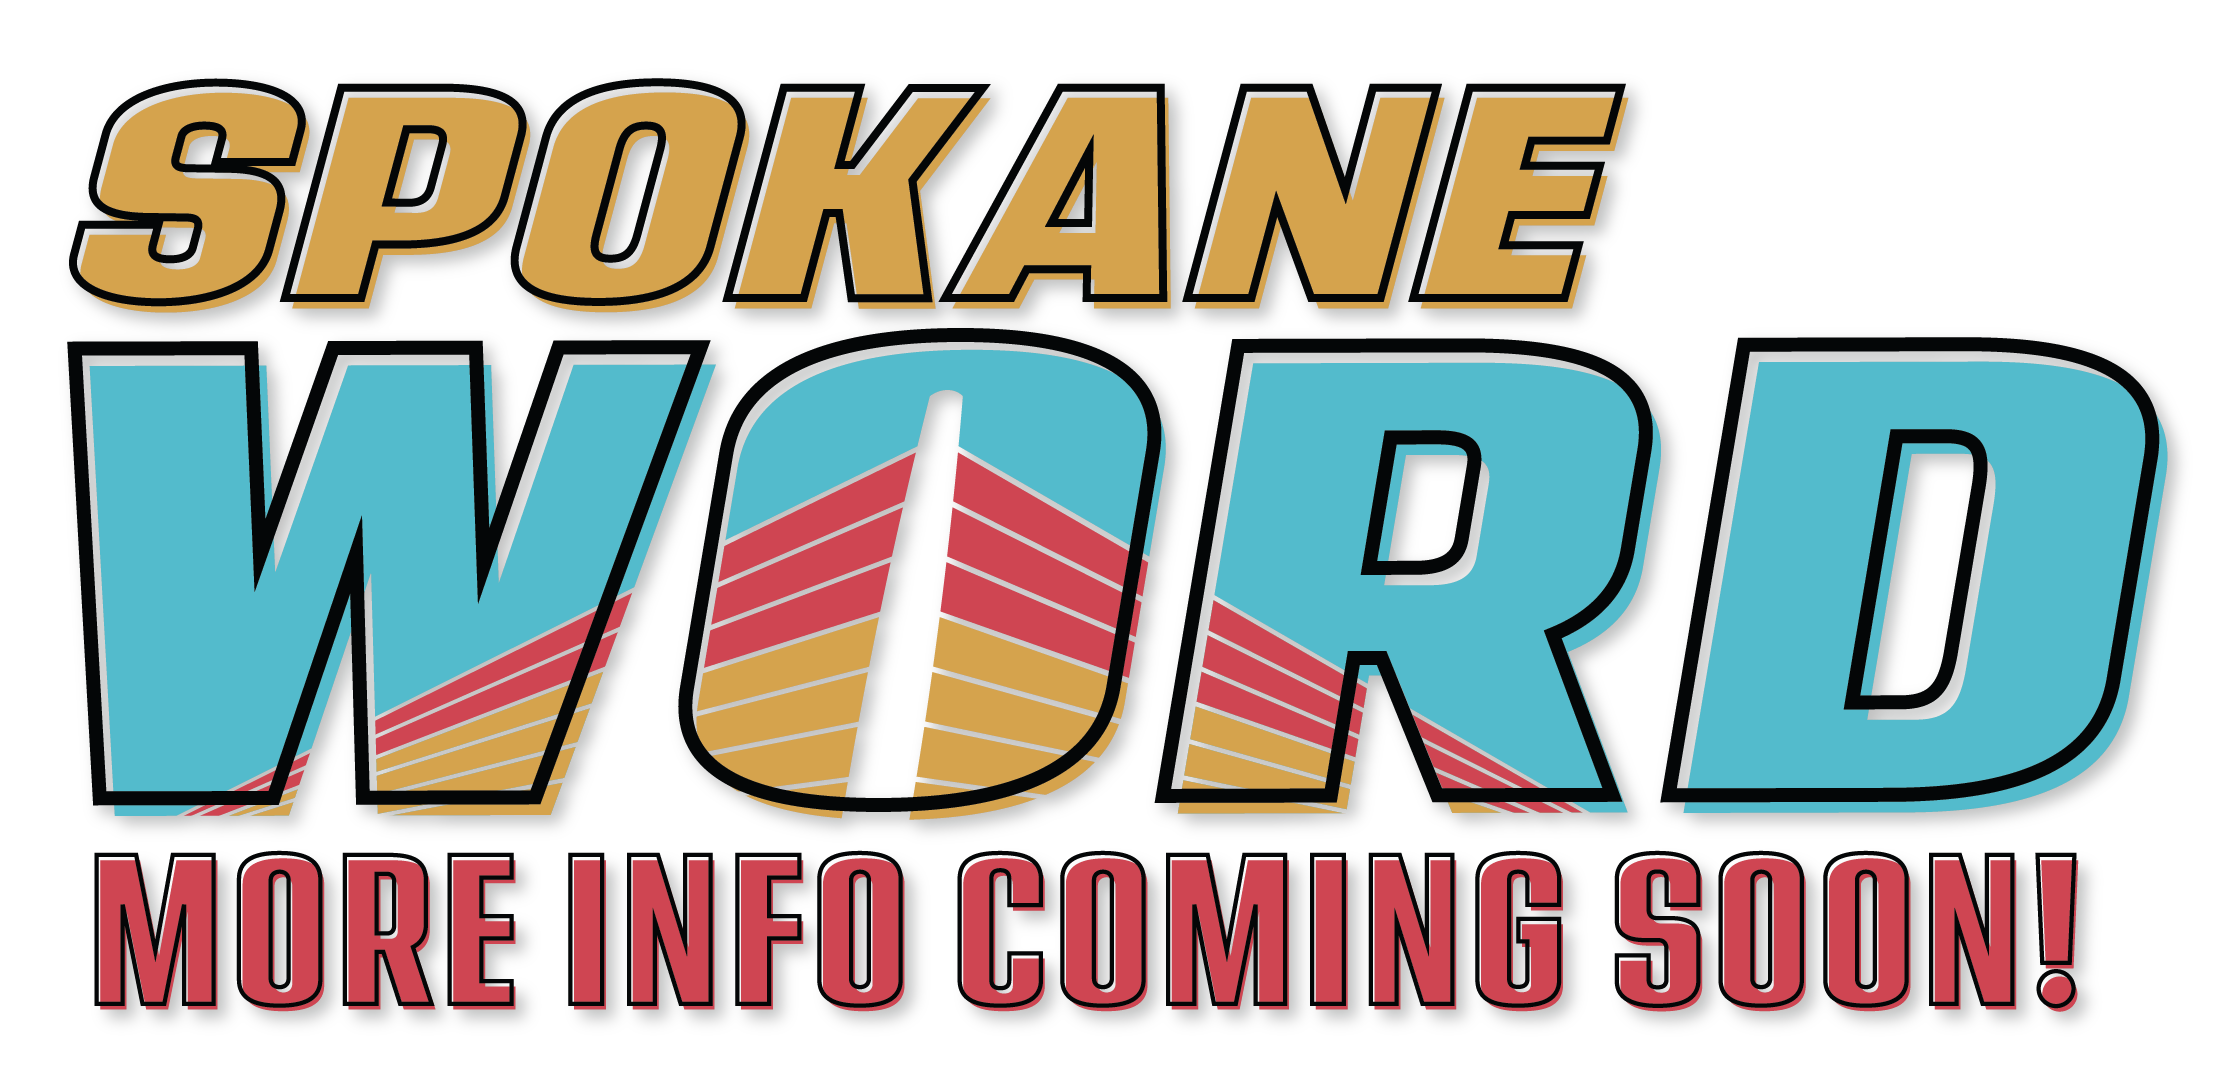 Spokane Word Logo - Coming Soon